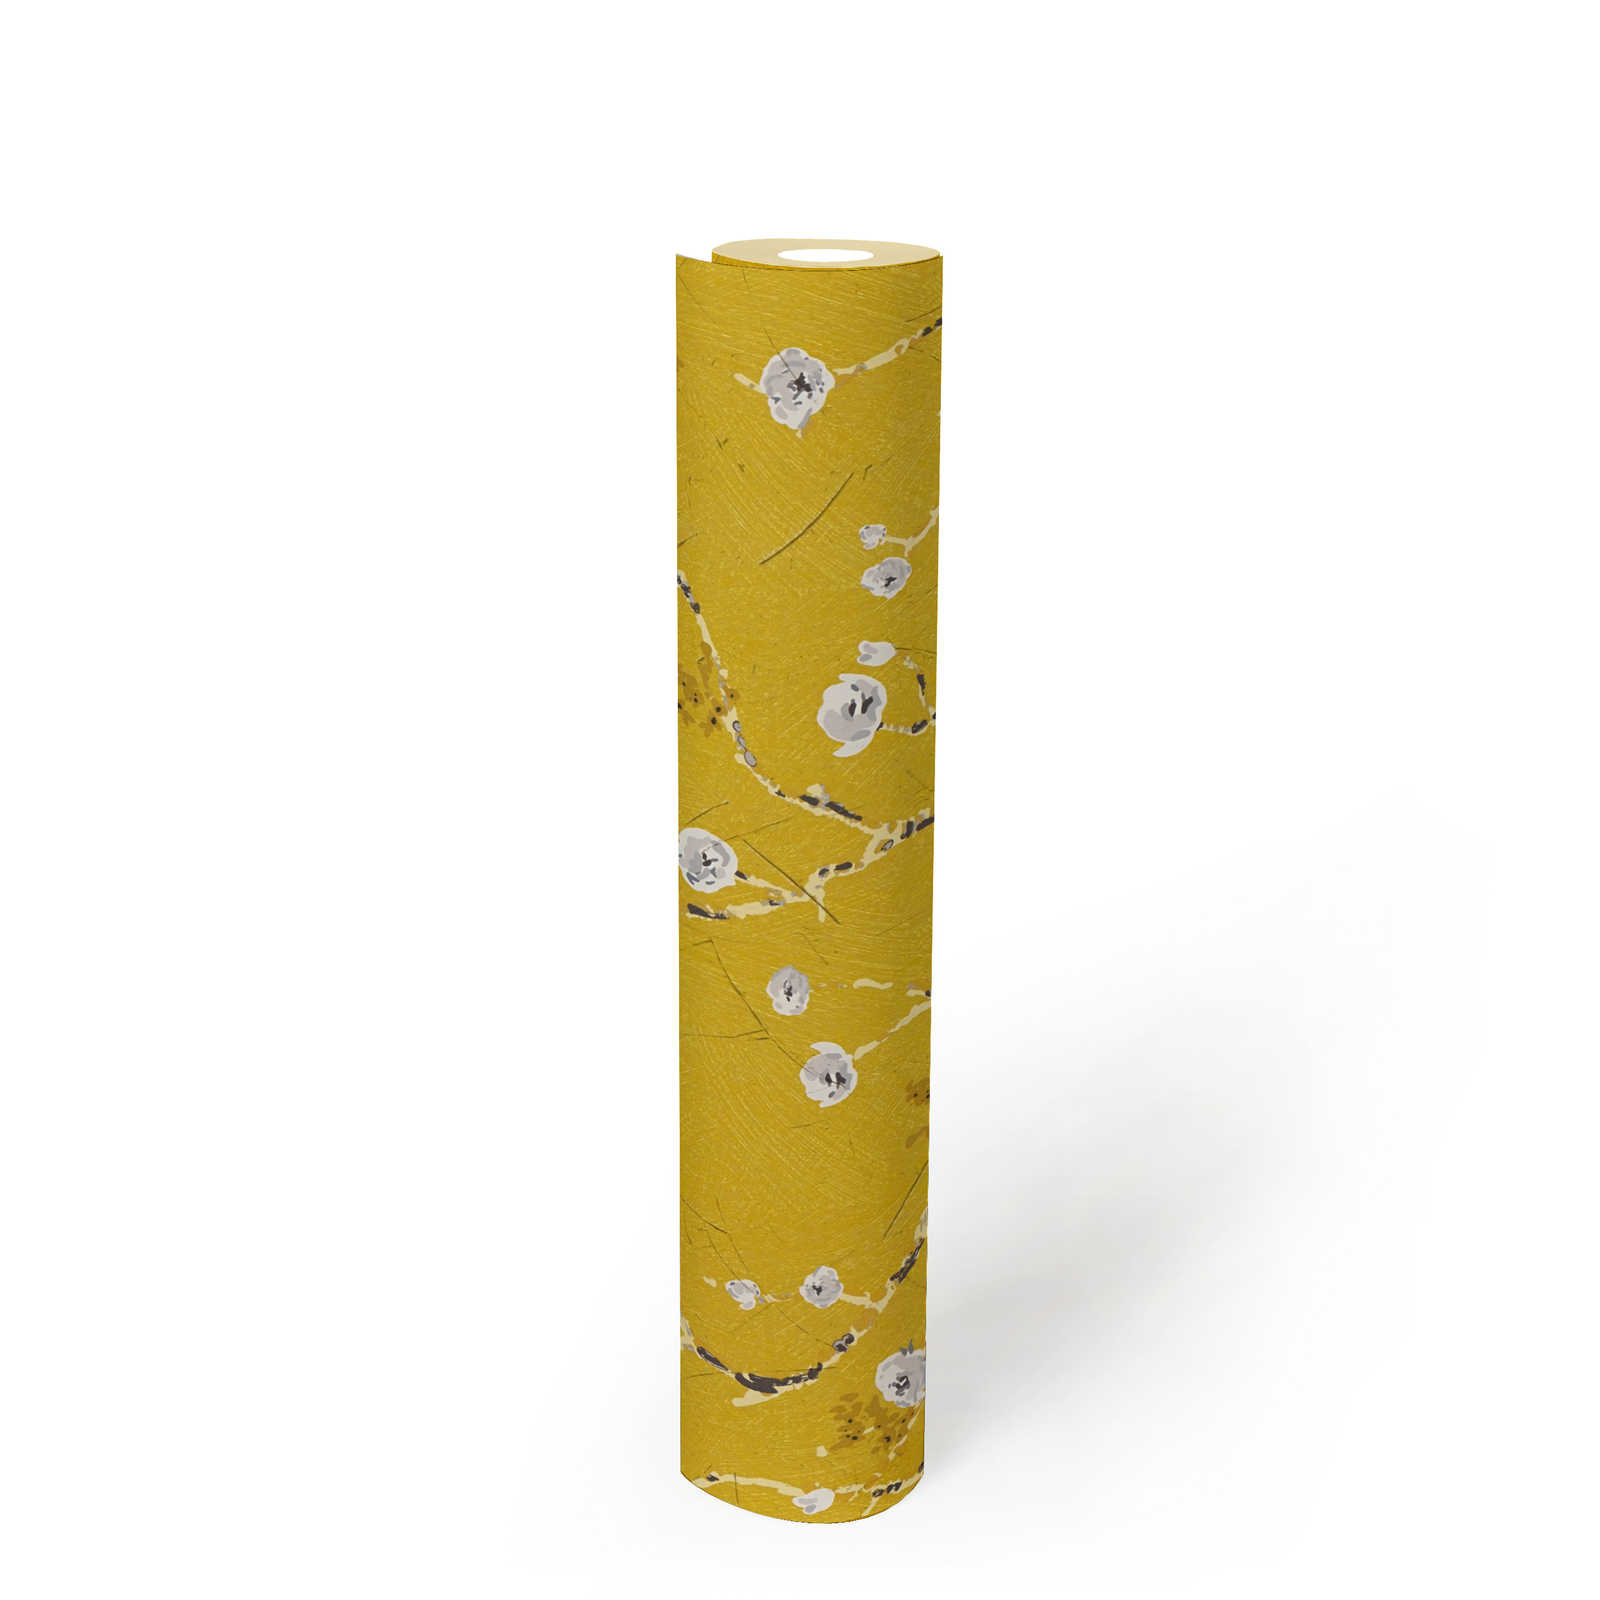             Papel pintado amarillo con ramas florecidas en estilo de dibujo
        